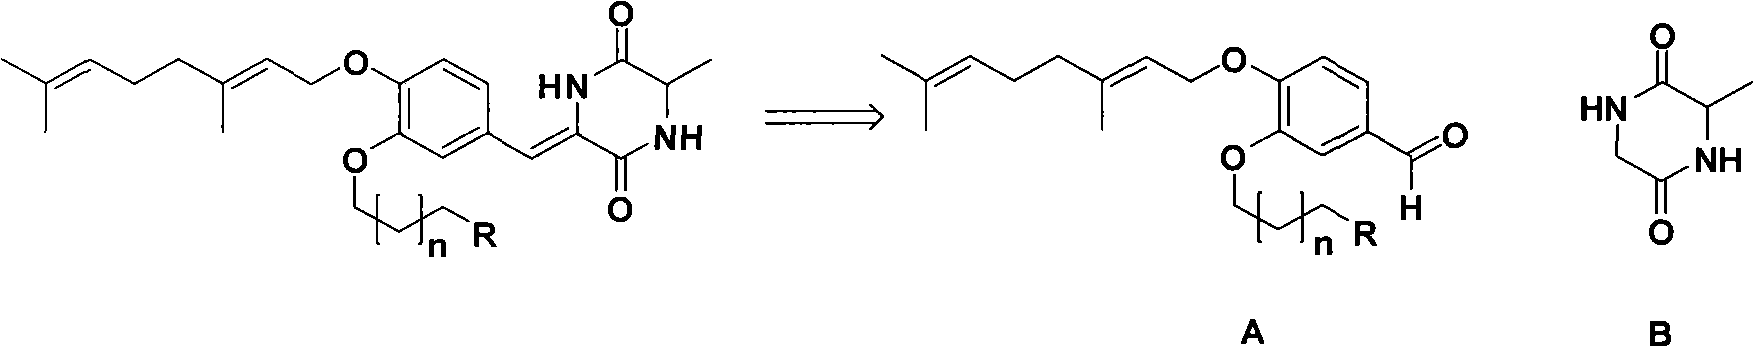 New diketone piperazidine-like derivative and application thereof